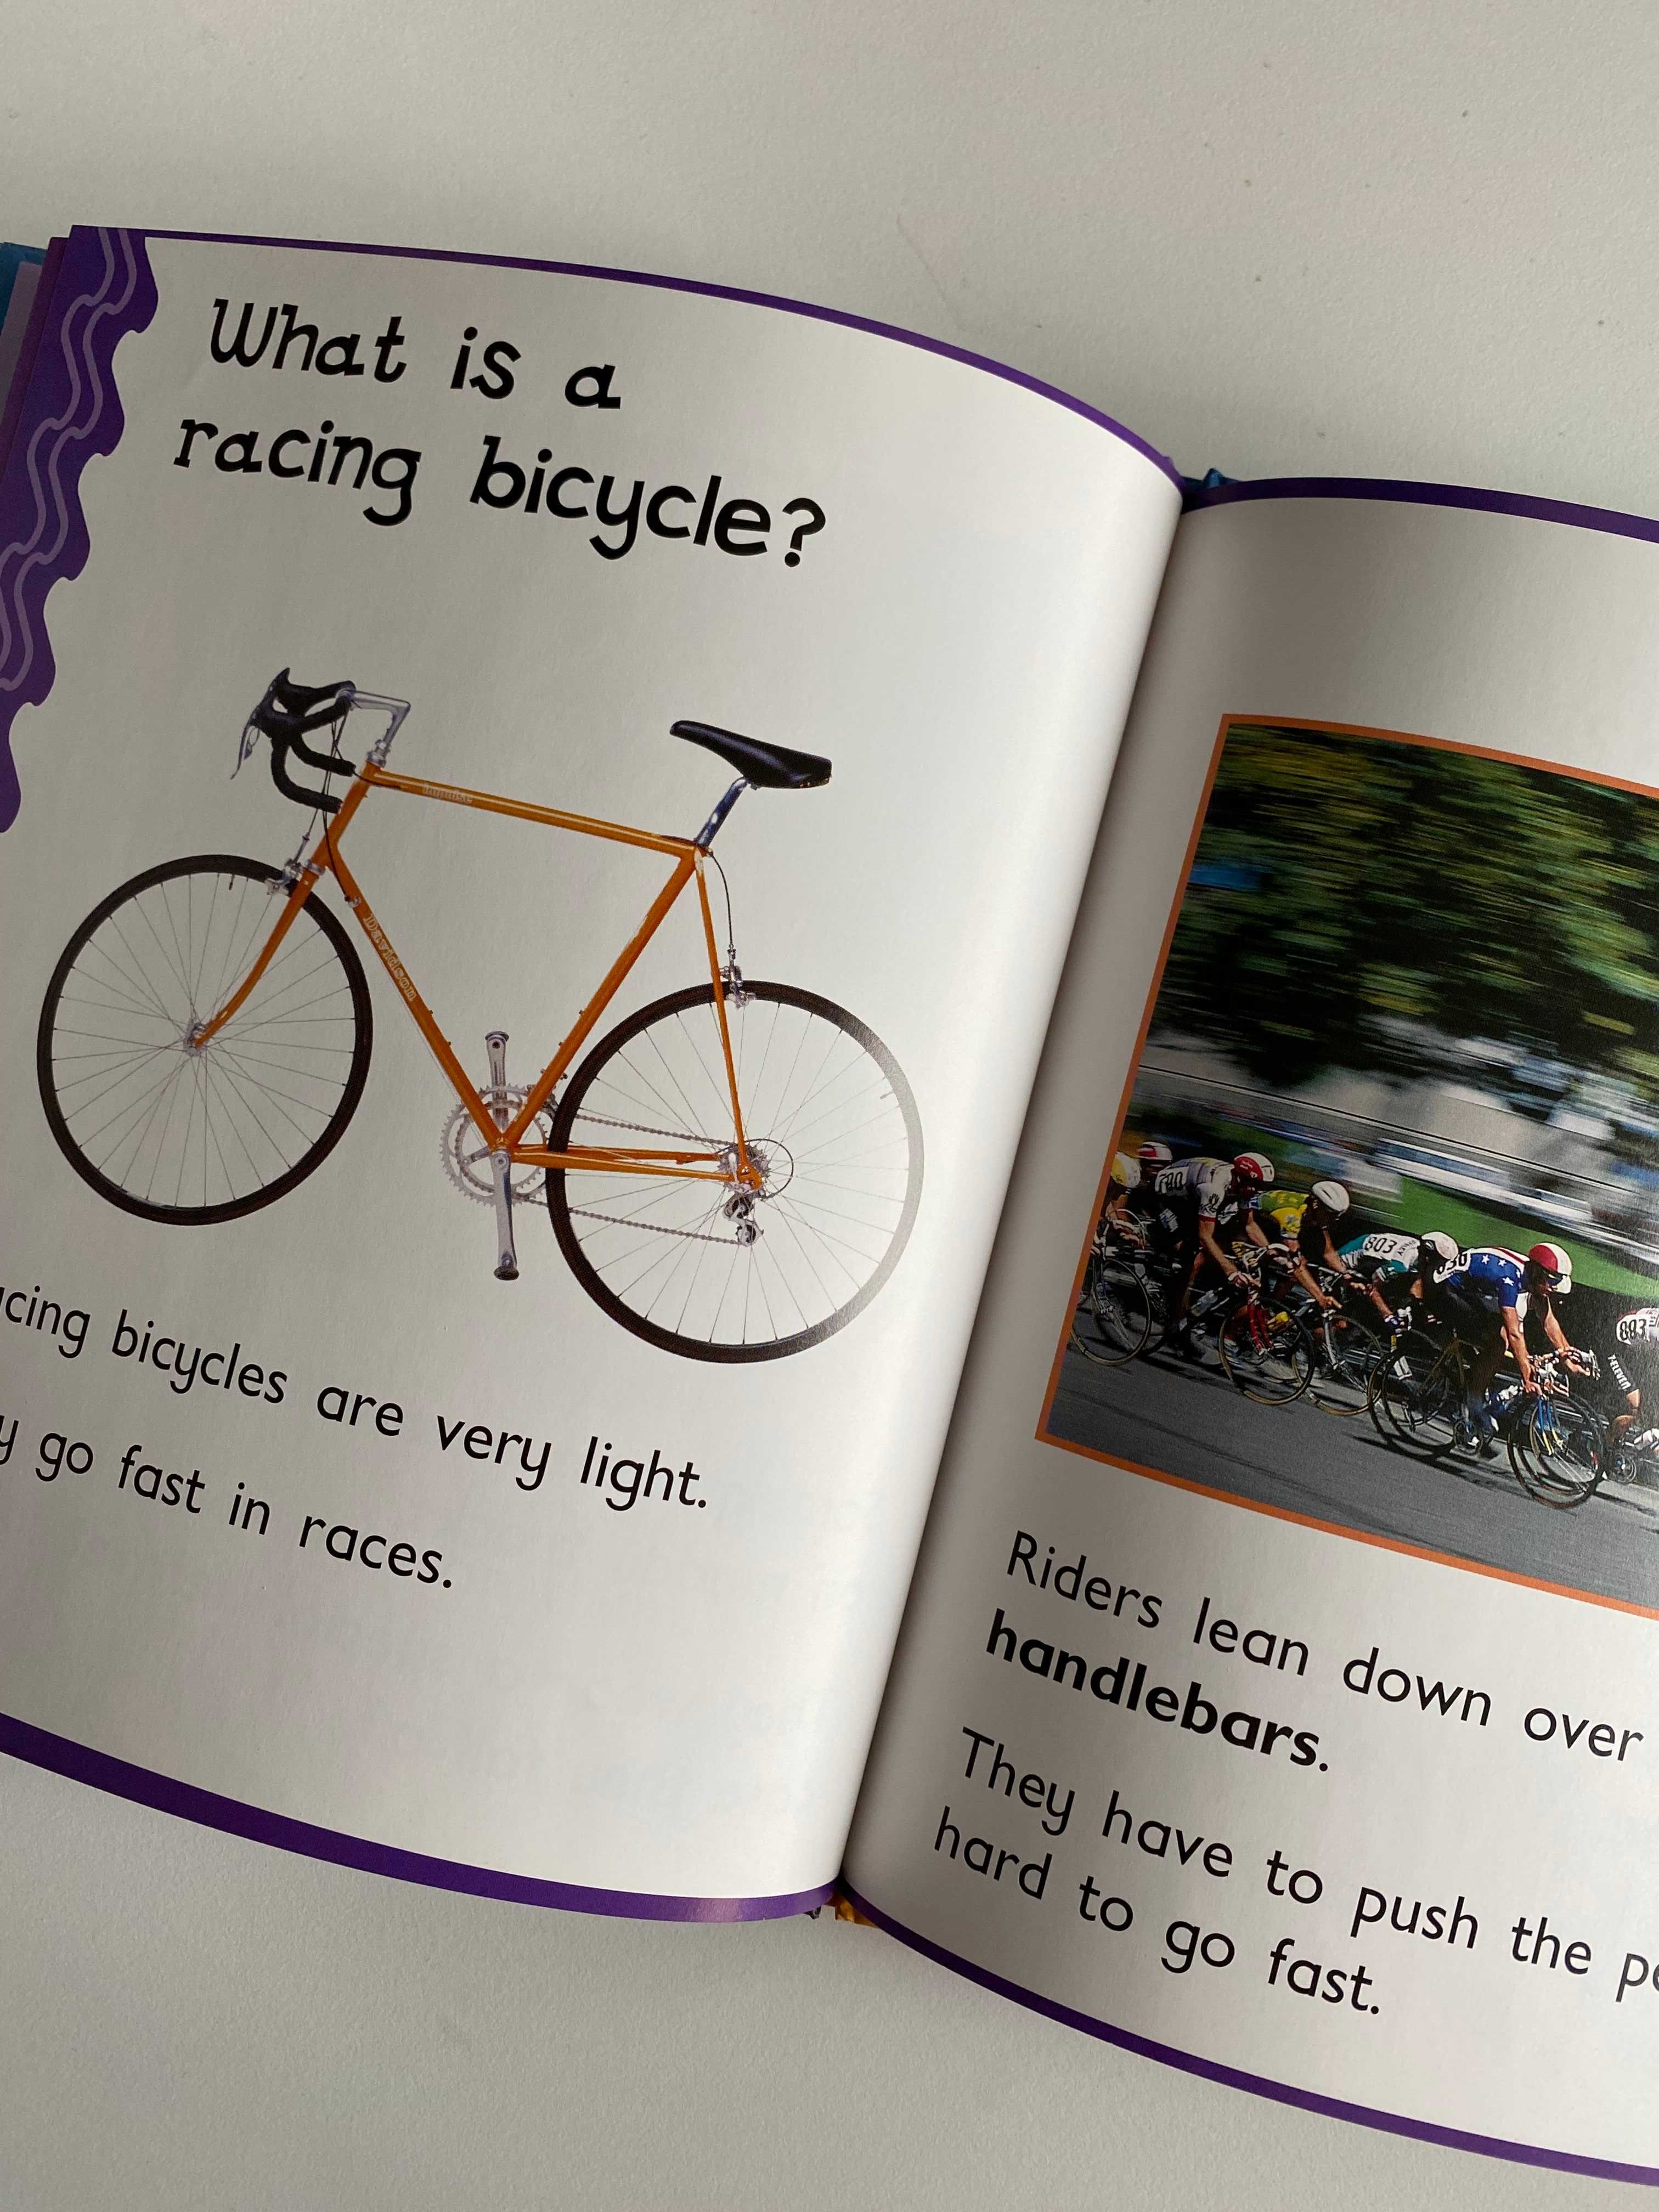 Bicycles (Read & Learn: Wheels, Wings & Water S.)